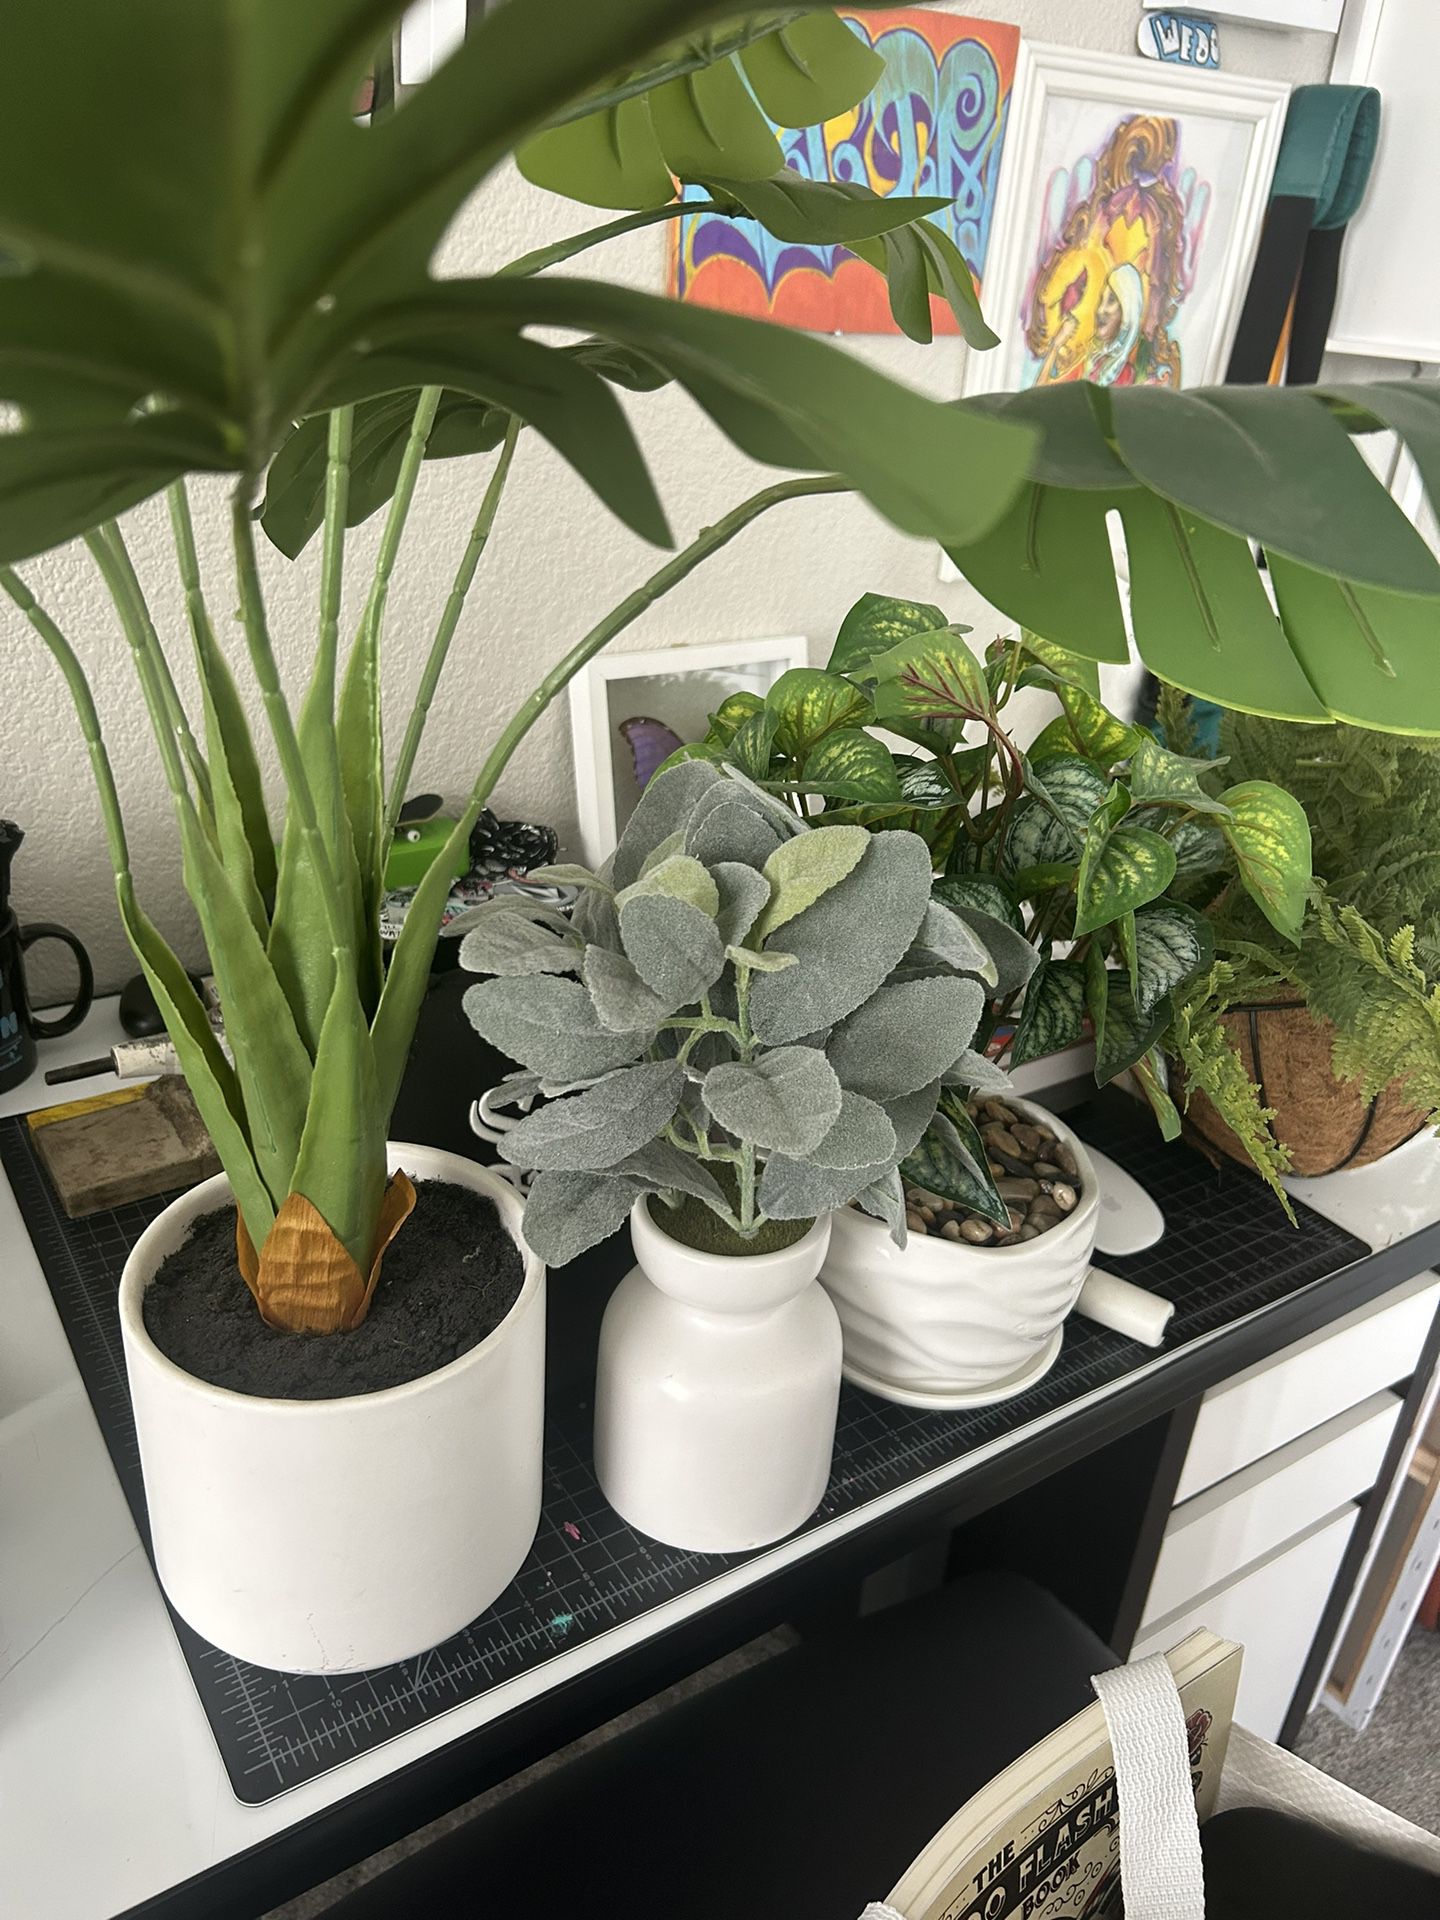 4 Fake House Plants 